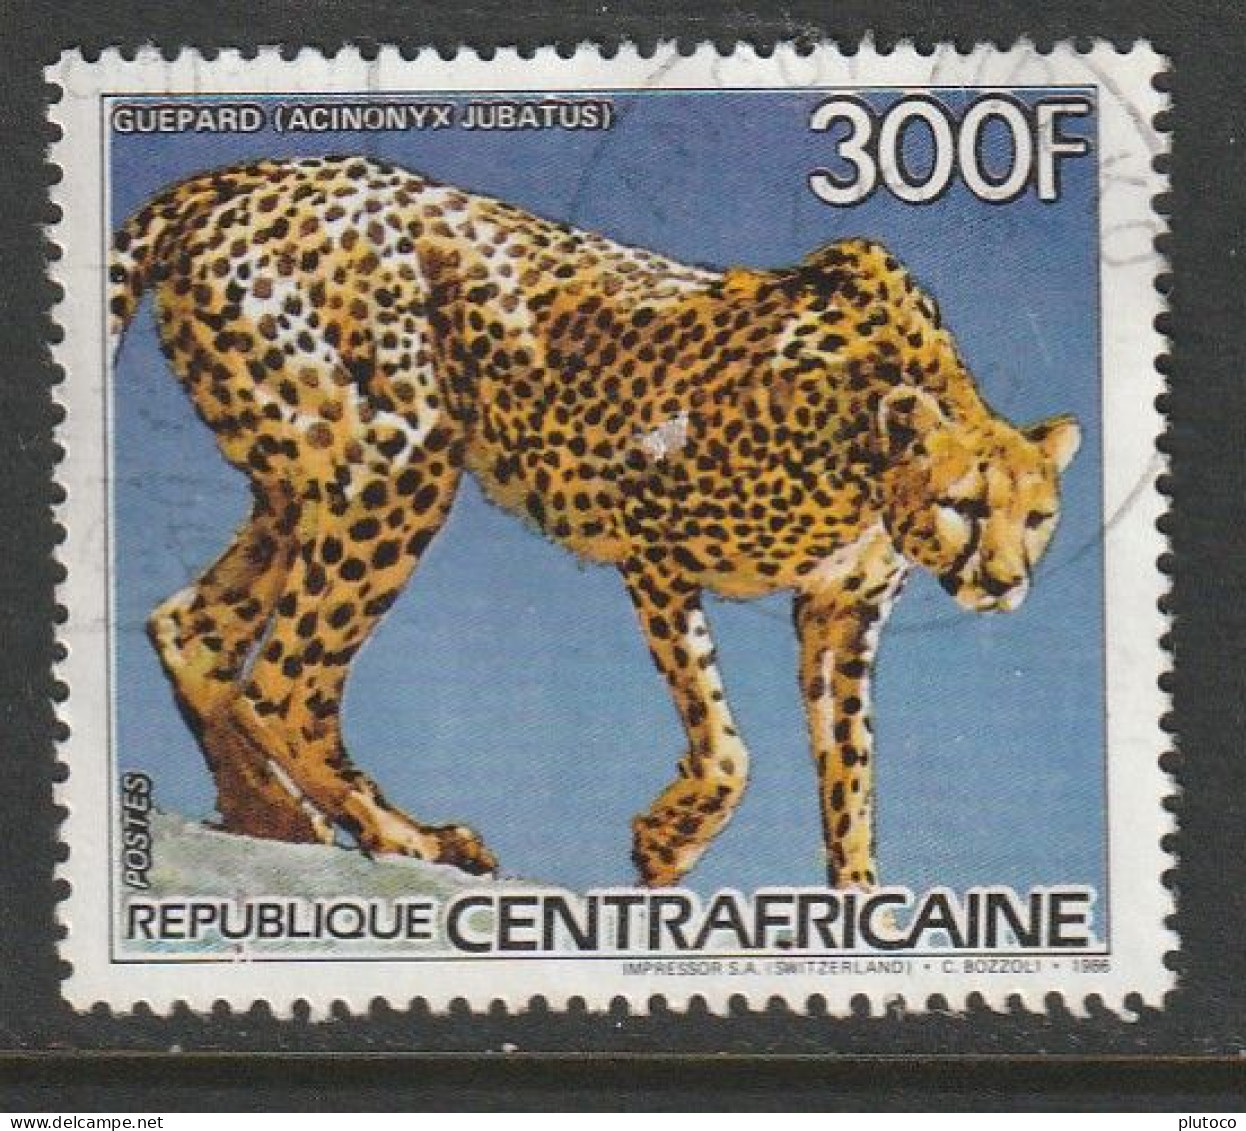 REPUBLICA CENTROAFRICANA, USED STAMP, OBLITERÉ, SELLO USADO - República Centroafricana